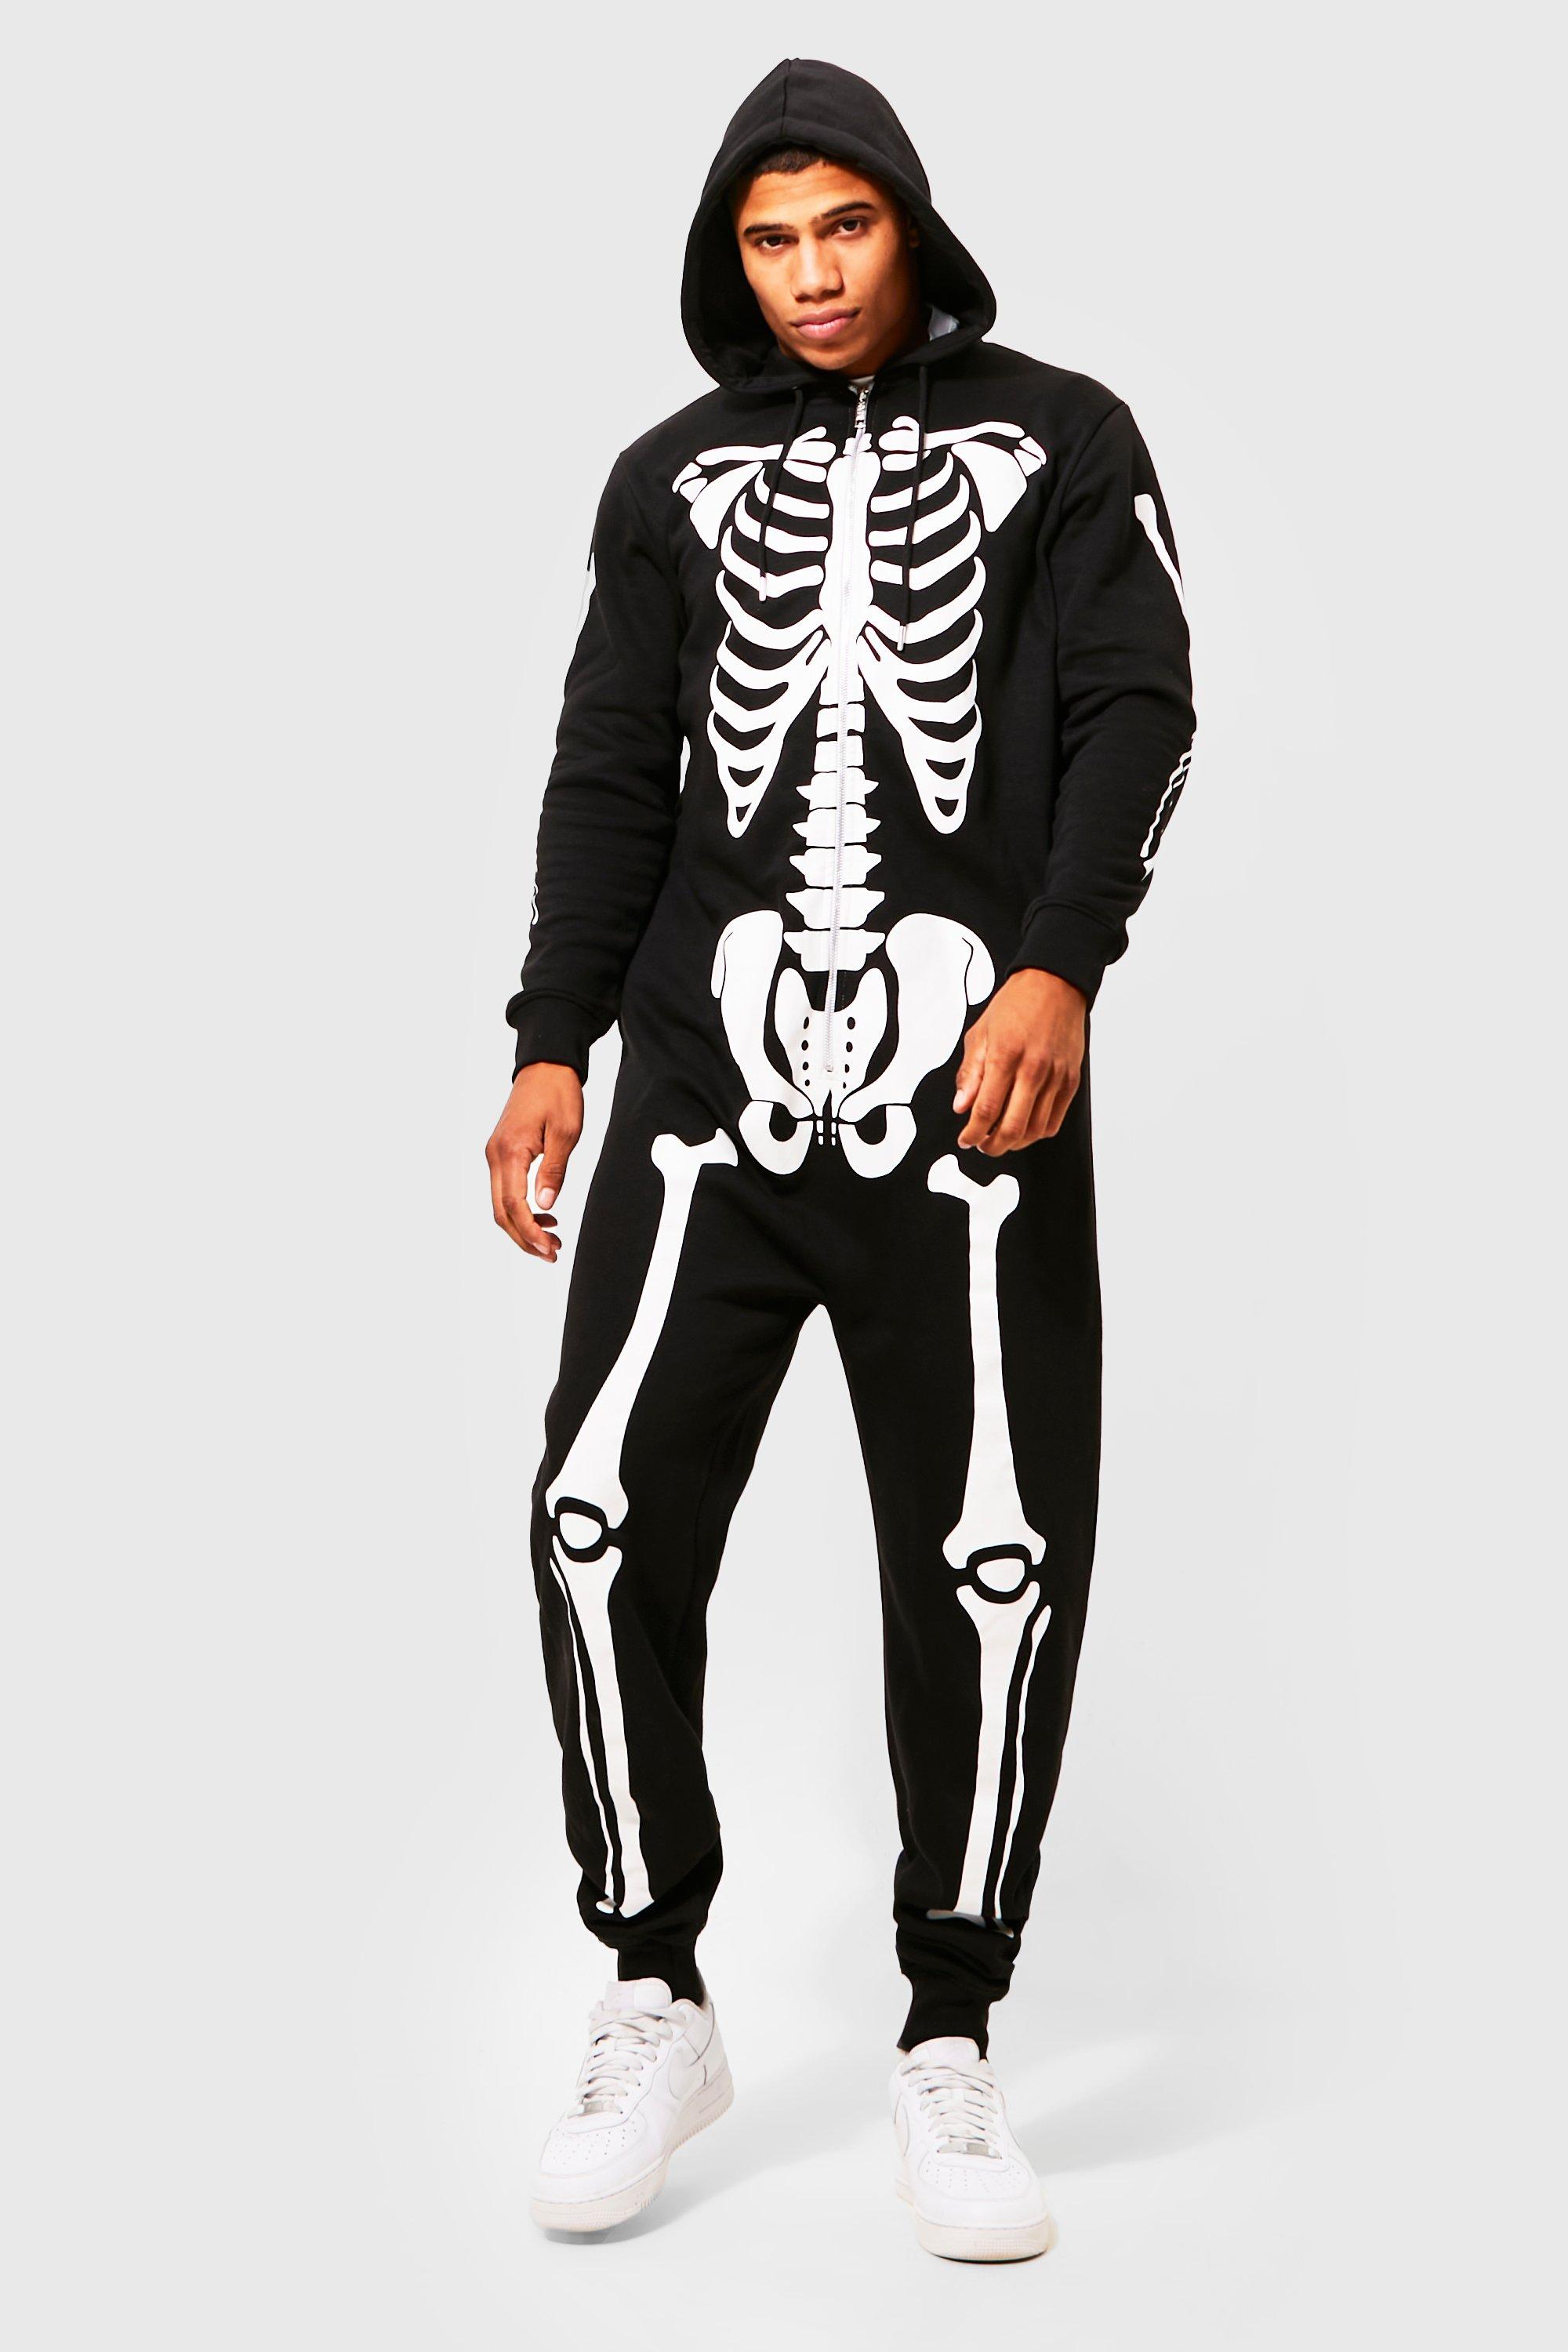 Glow In The Dark Skeleton Adult Onesie Halloween Costume Plush One ...